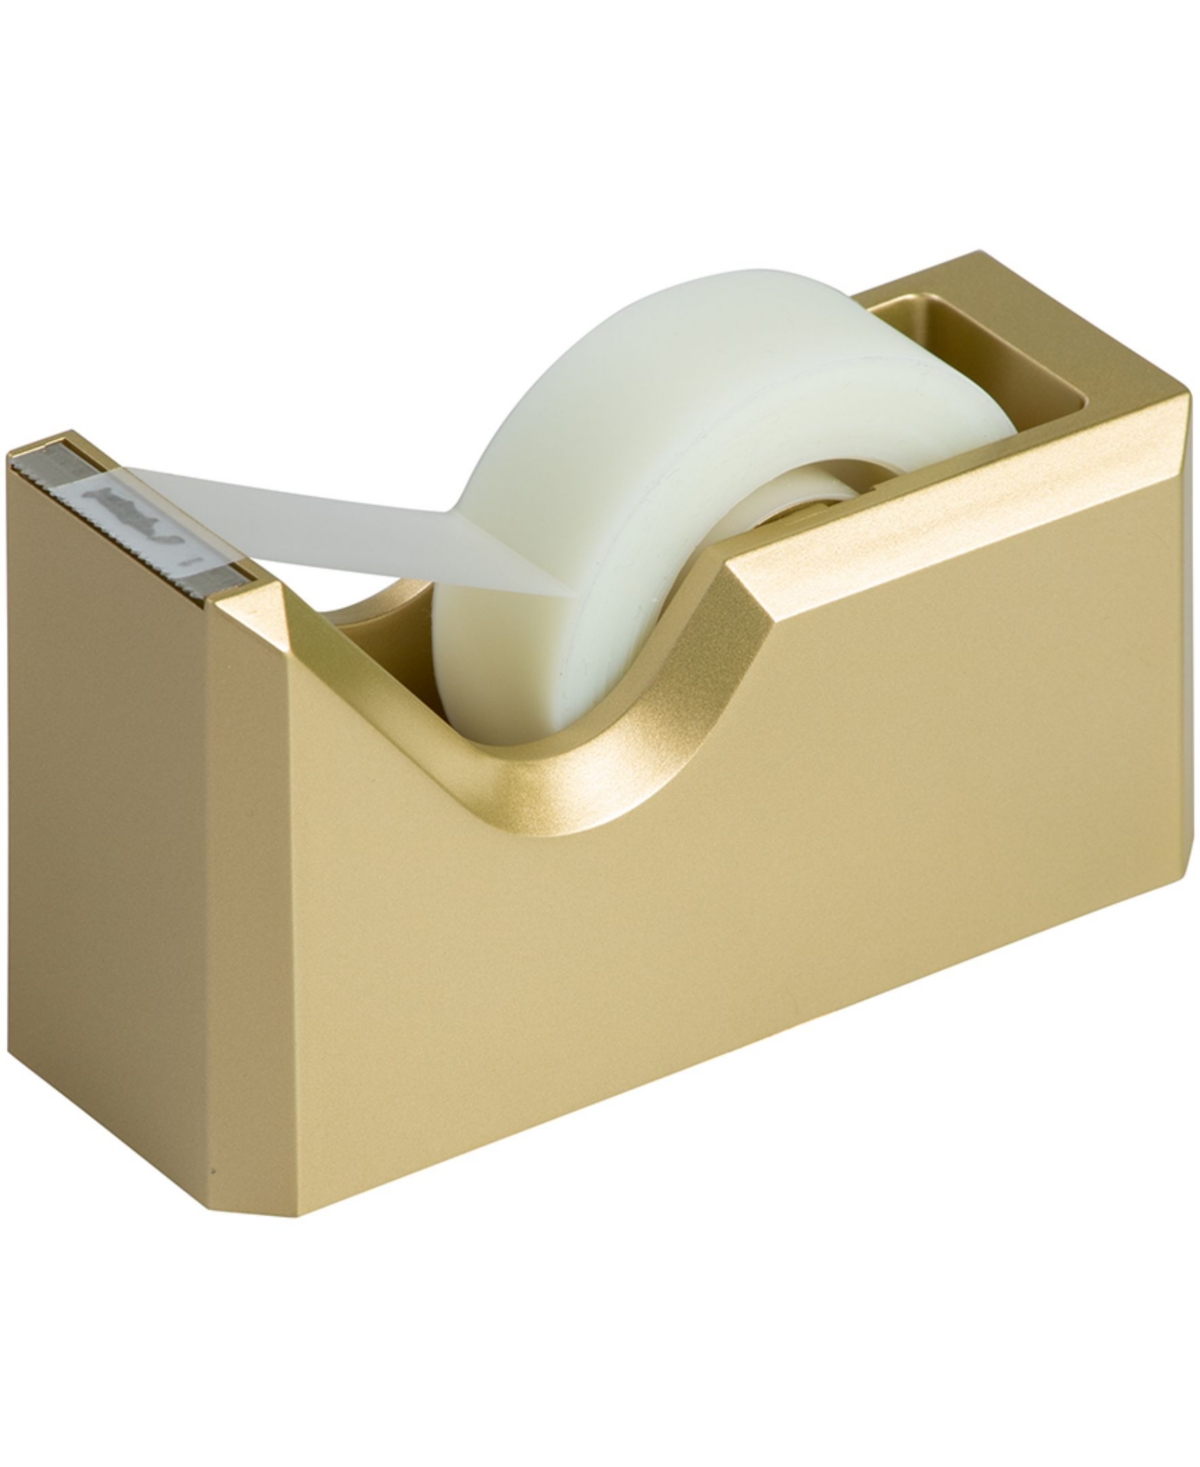 Jam Paper Colorful Desk Tape Dispensers In Gold